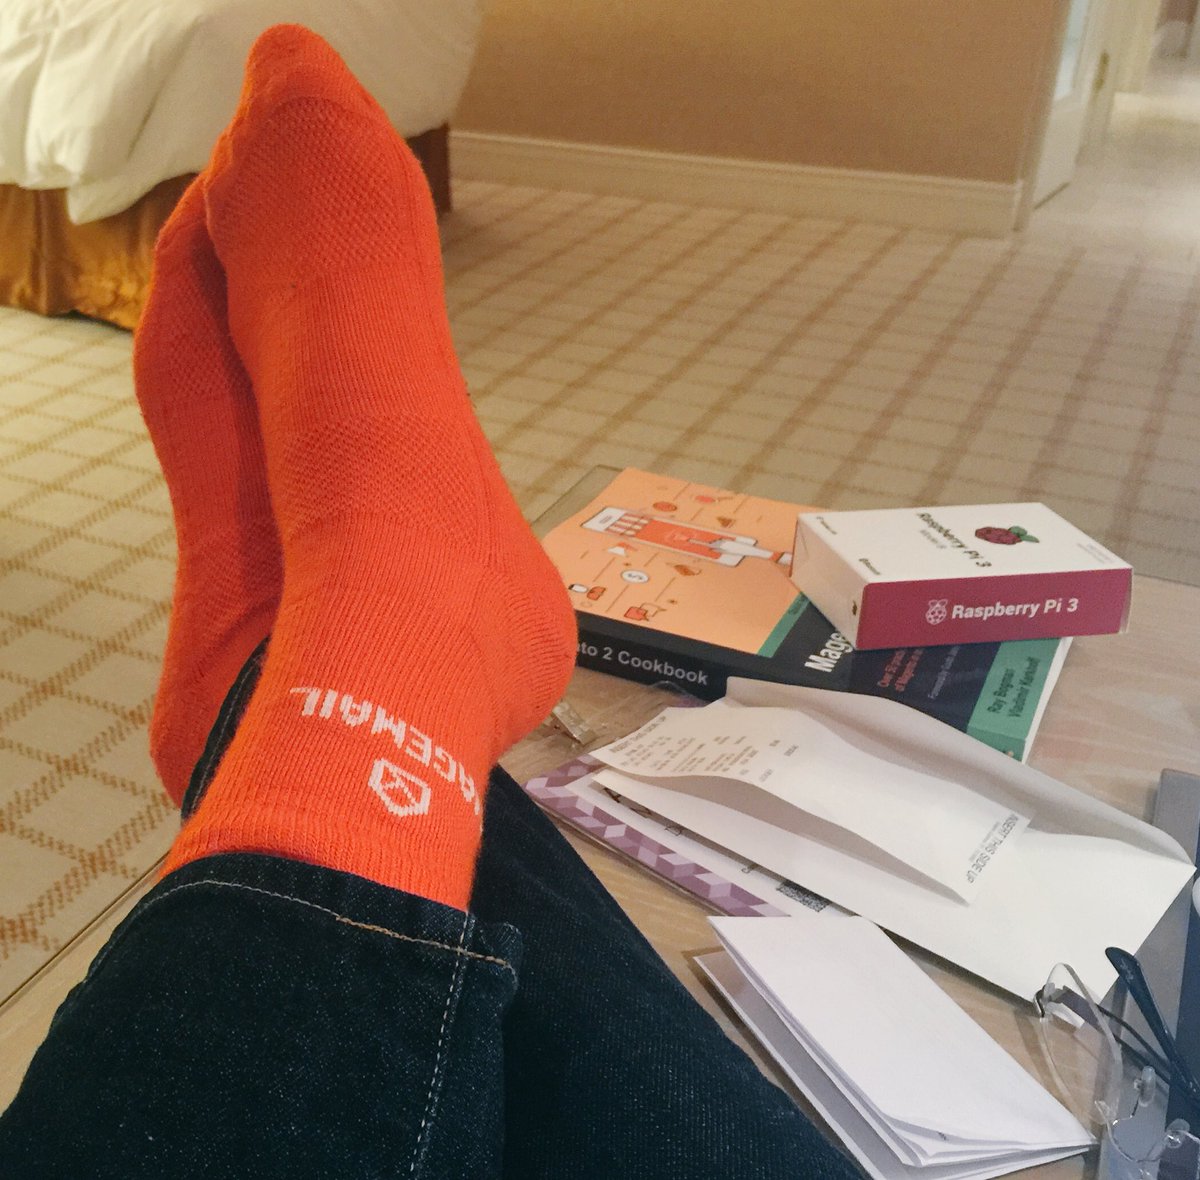 allanmacgregor: You cannot start #MagentoImagine without the proper socks, right @kalenjordan? https://t.co/LnADK12zKB